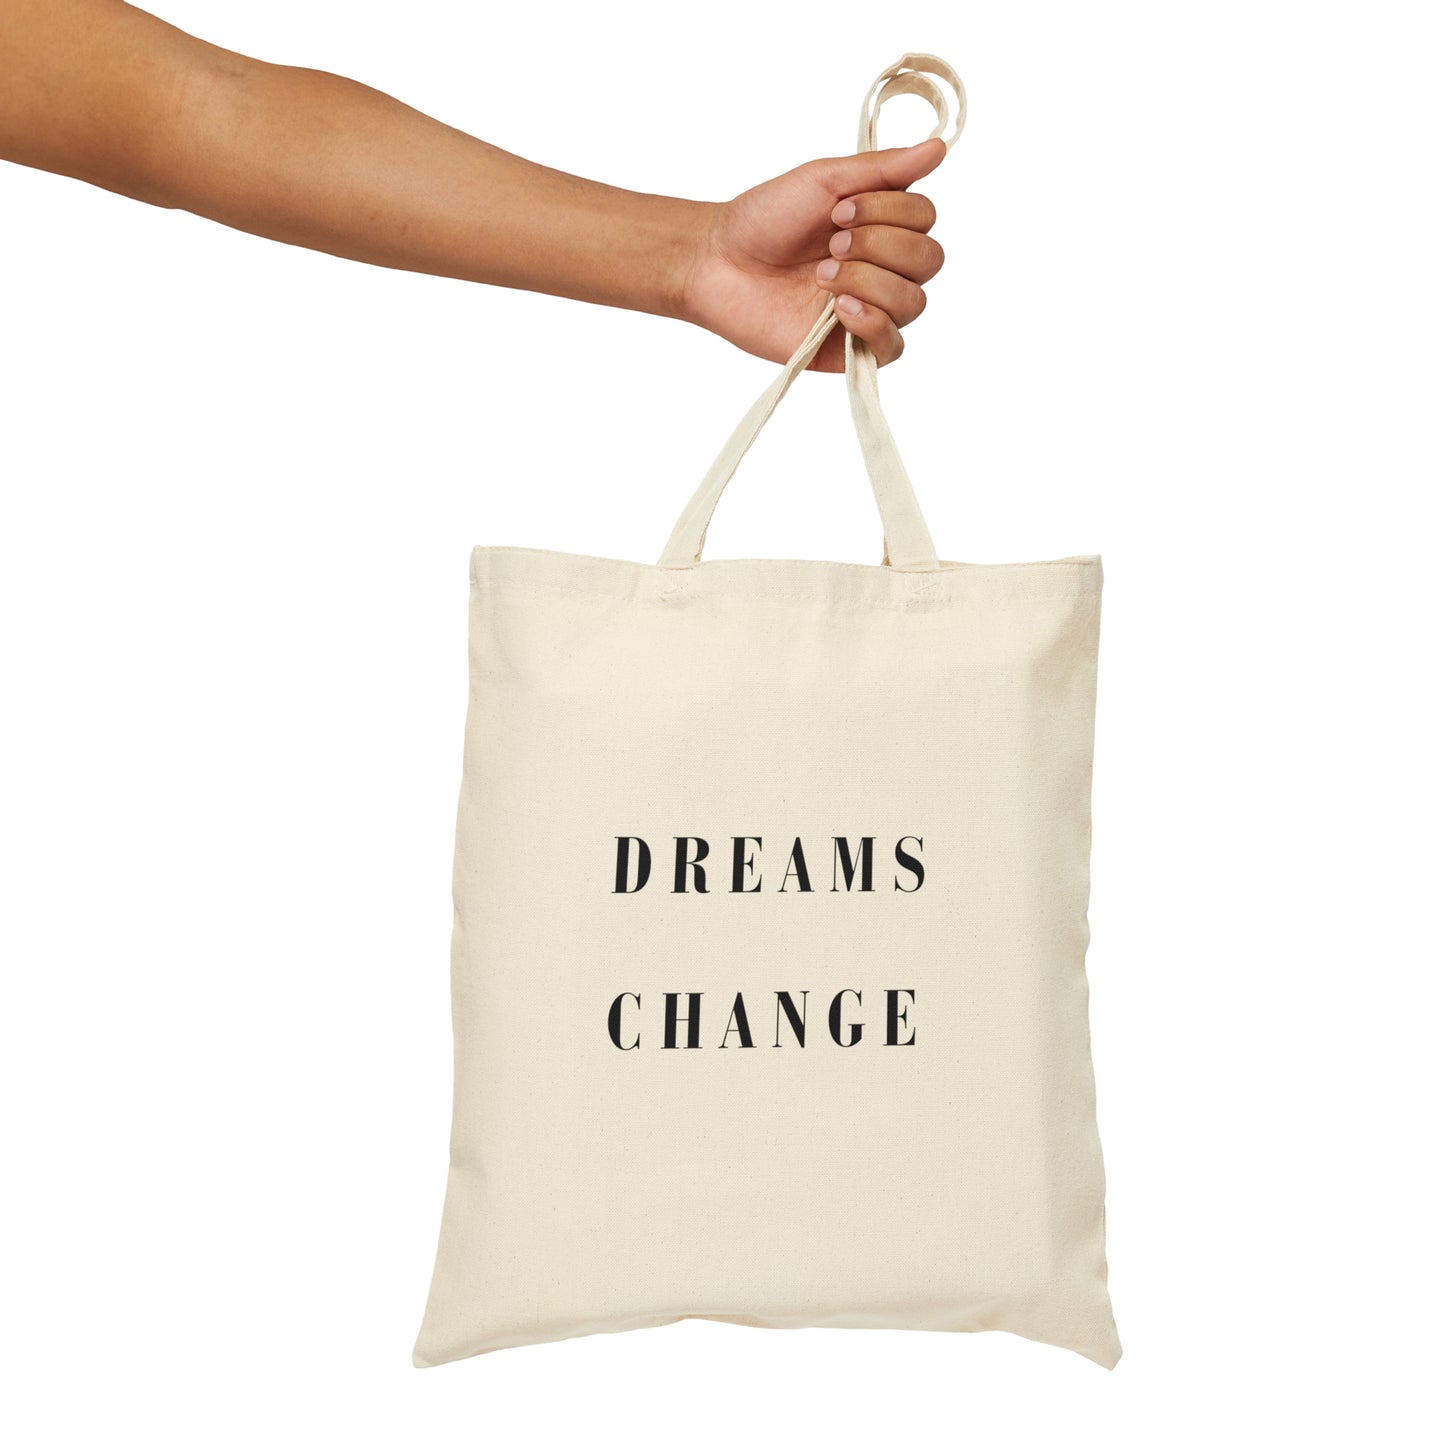 Dreams Change Tote Bag